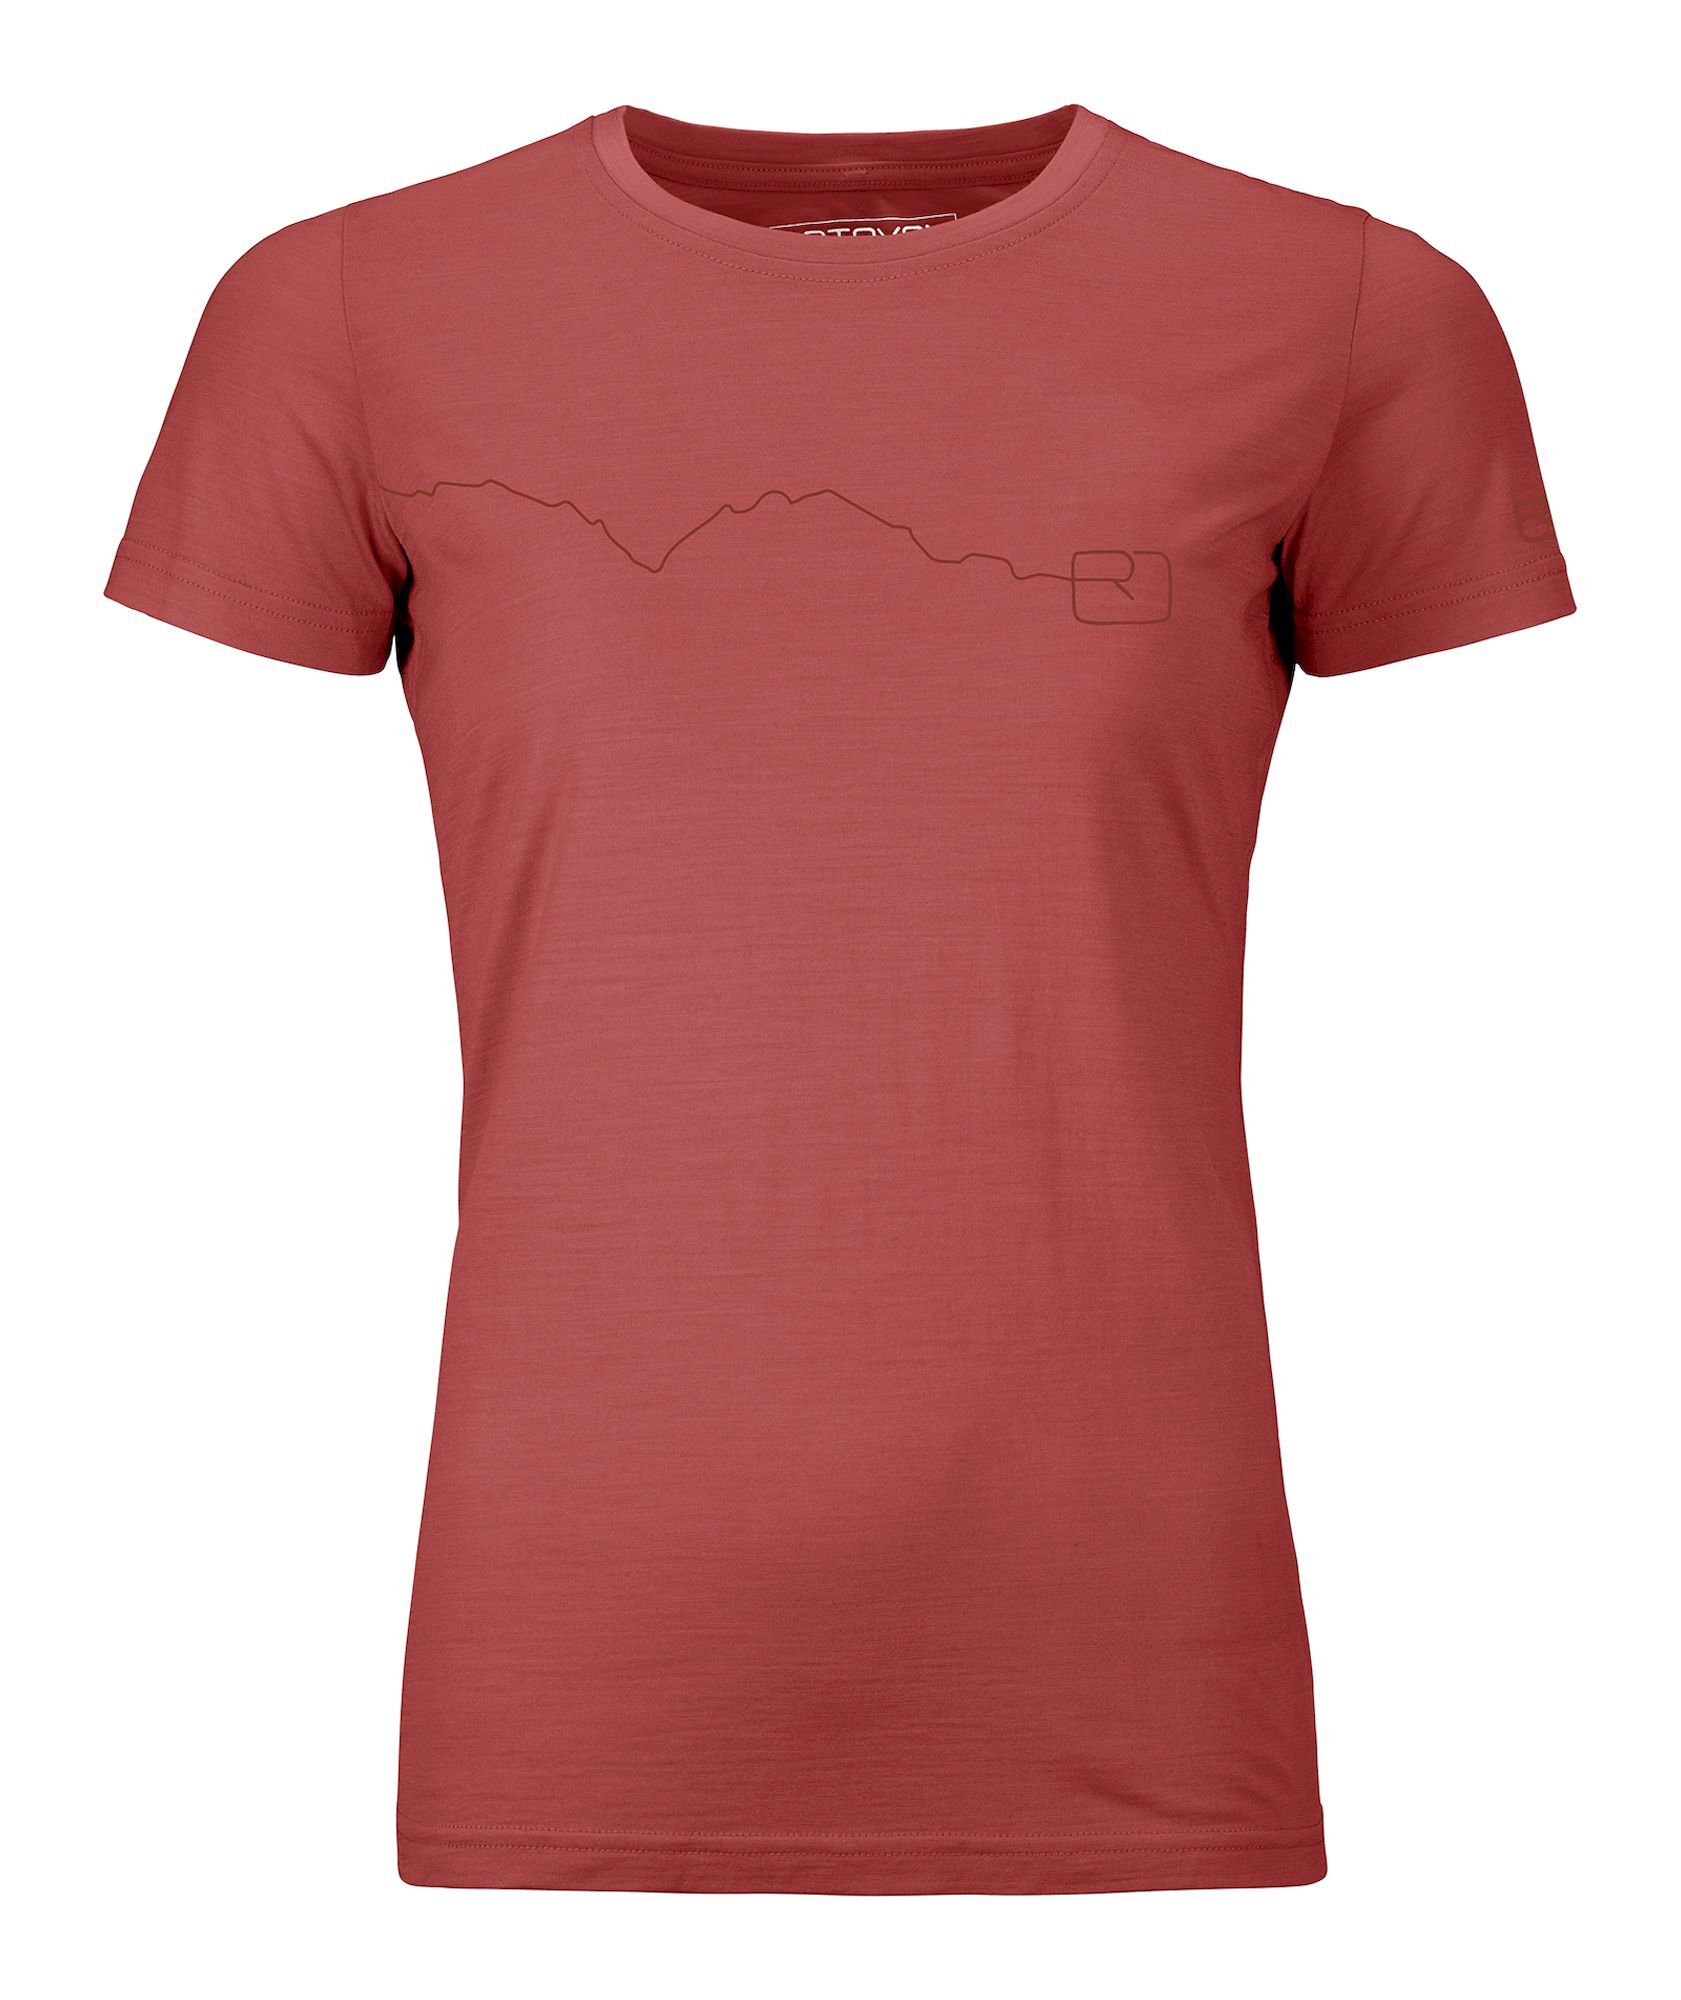 Ortovox 120 Tec Mountain Camiseta lana merino - Mujer